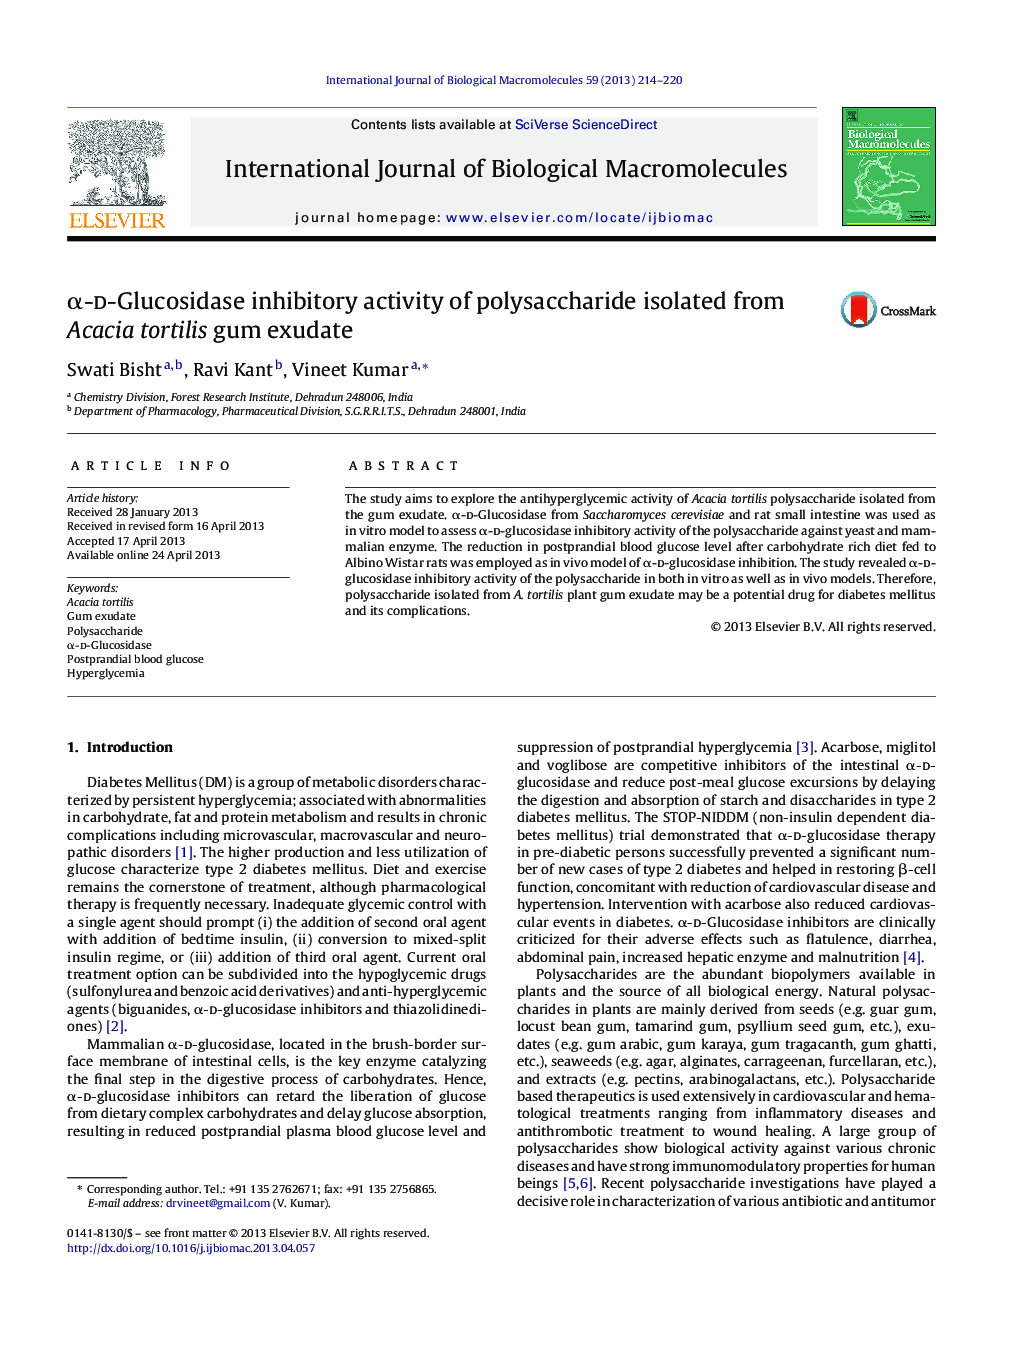 Î±-d-Glucosidase inhibitory activity of polysaccharide isolated from Acacia tortilis gum exudate